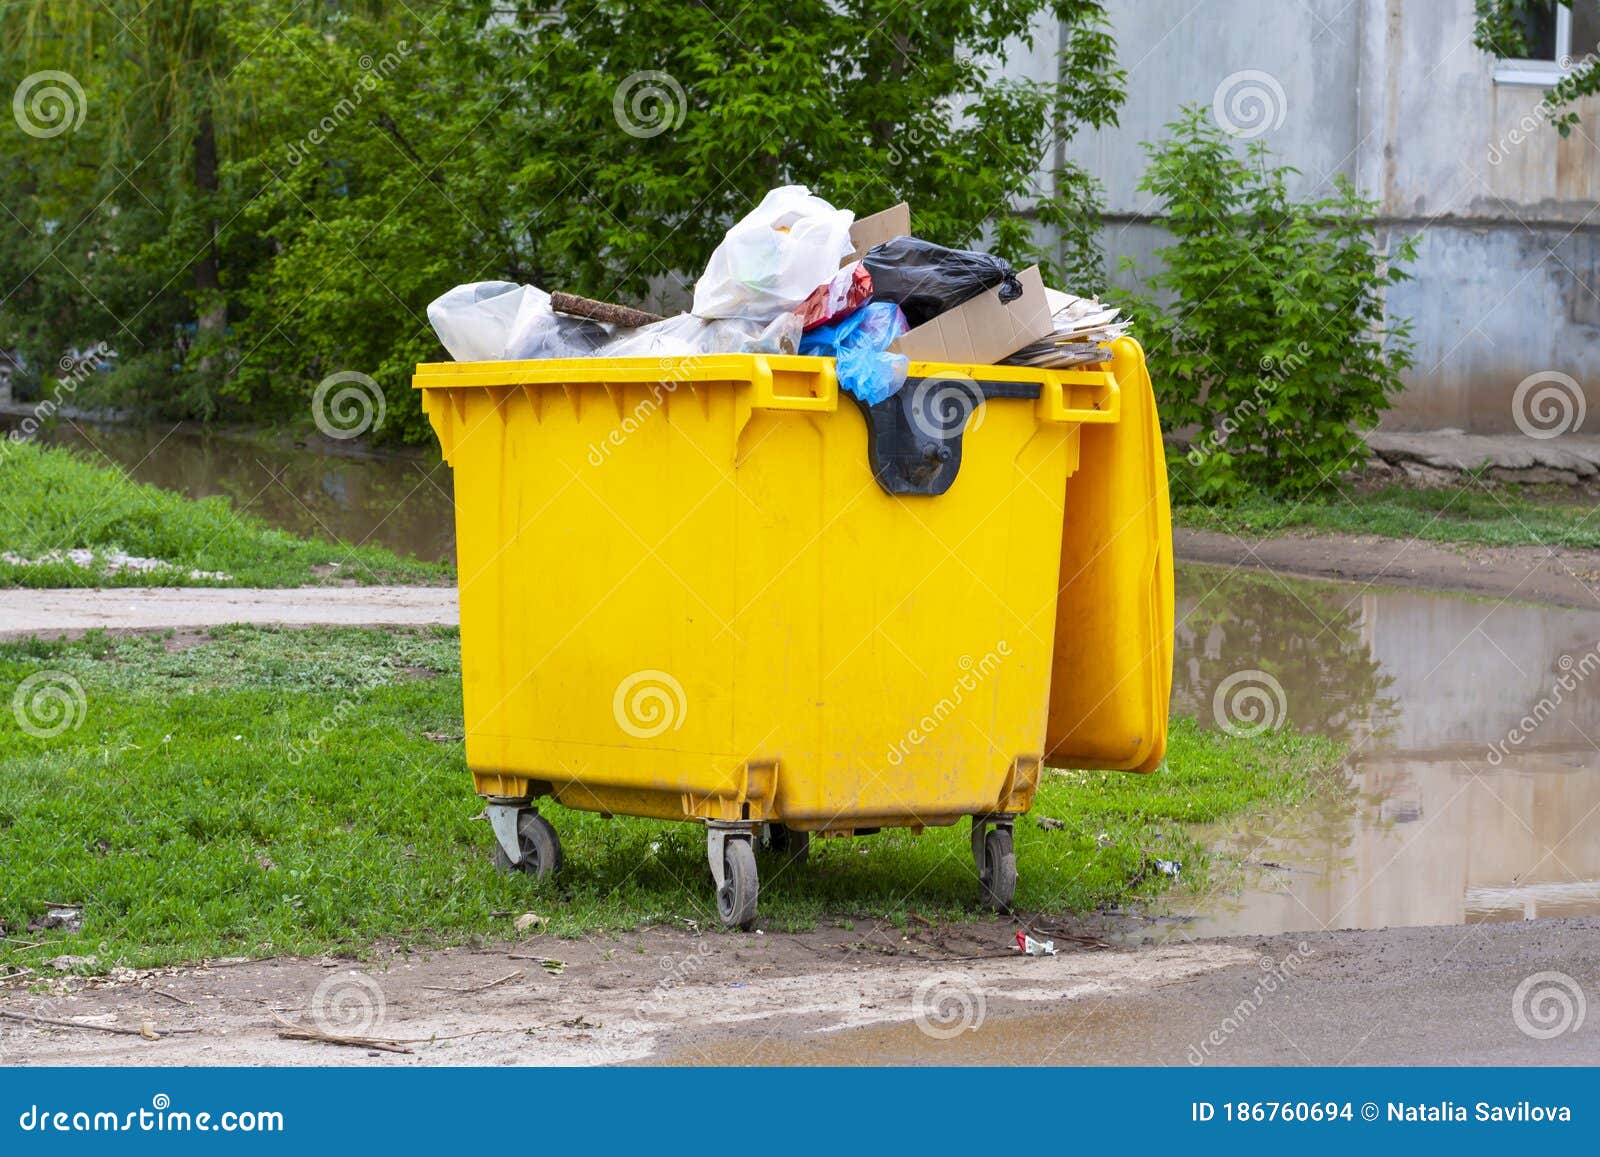 https://thumbs.dreamstime.com/z/trash-cans-full-yellow-trash-bin-plastic-trash-can-trash-cans-full-yellow-trash-bin-plastic-trash-can-solid-waste-186760694.jpg